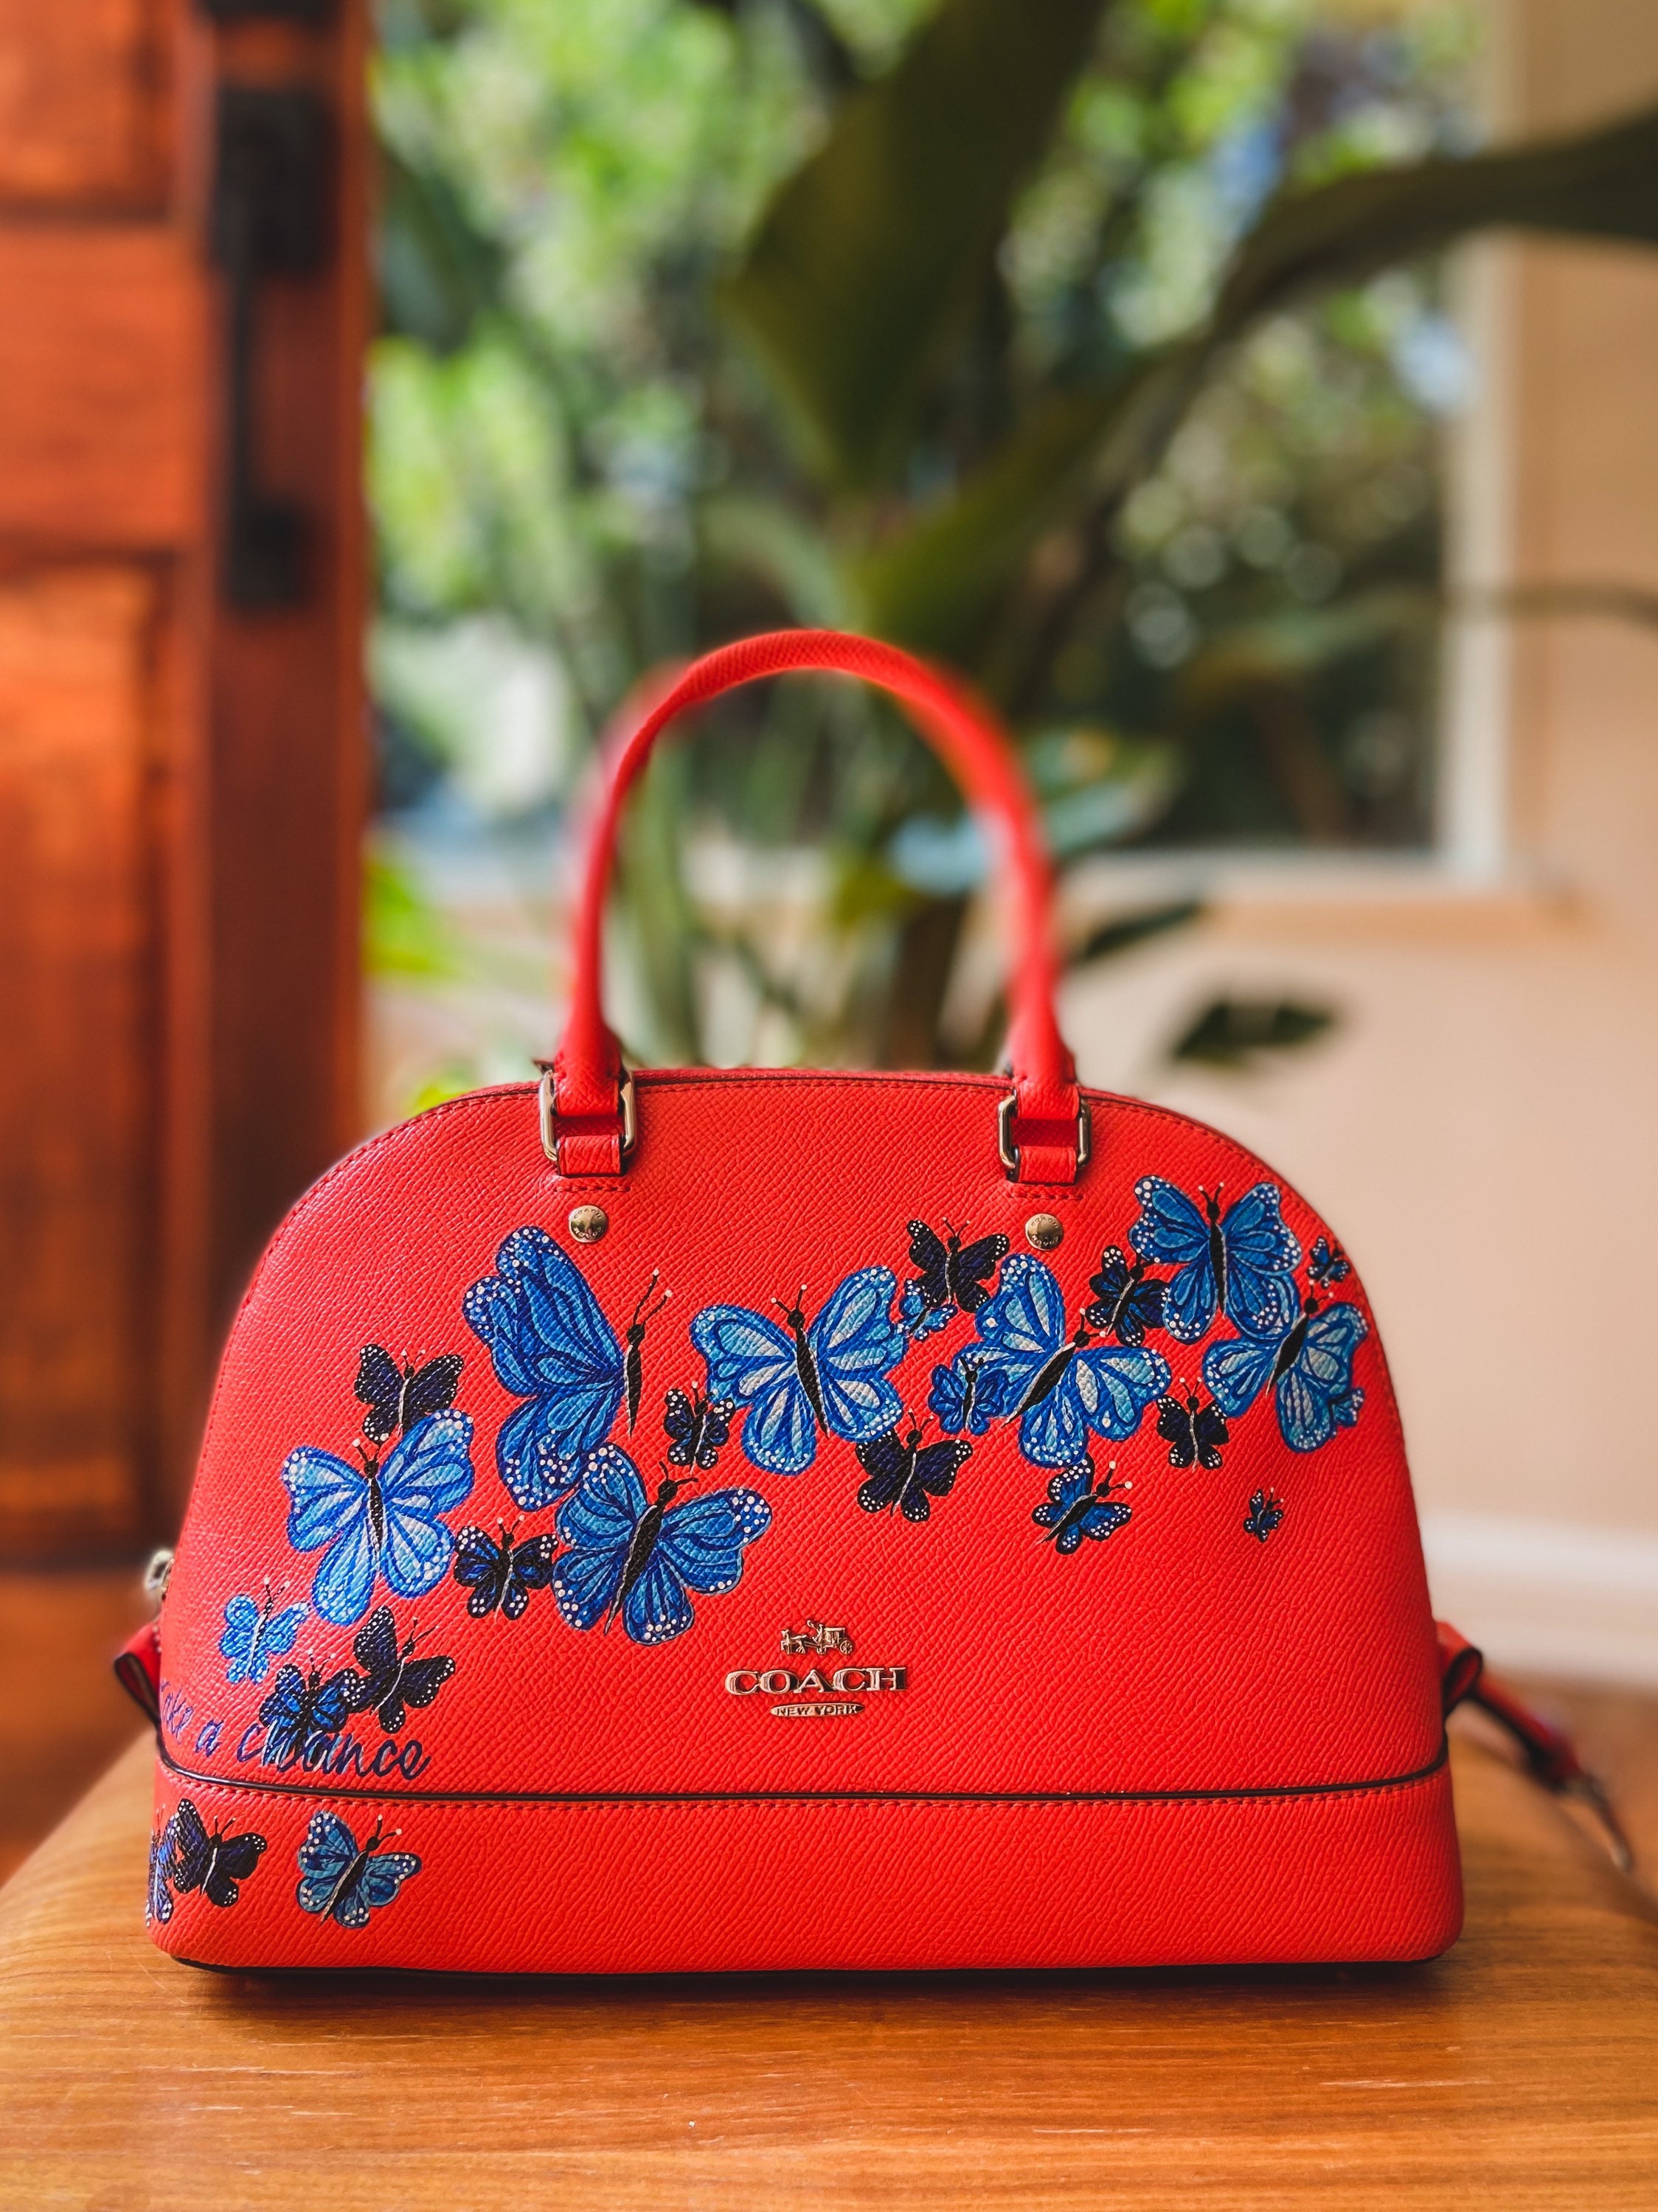 Custom Hand-Painted Bag / Personalized Designer Handbag Purse Tote Clutch / Customer Provides Bag for Painting / Please Read Description